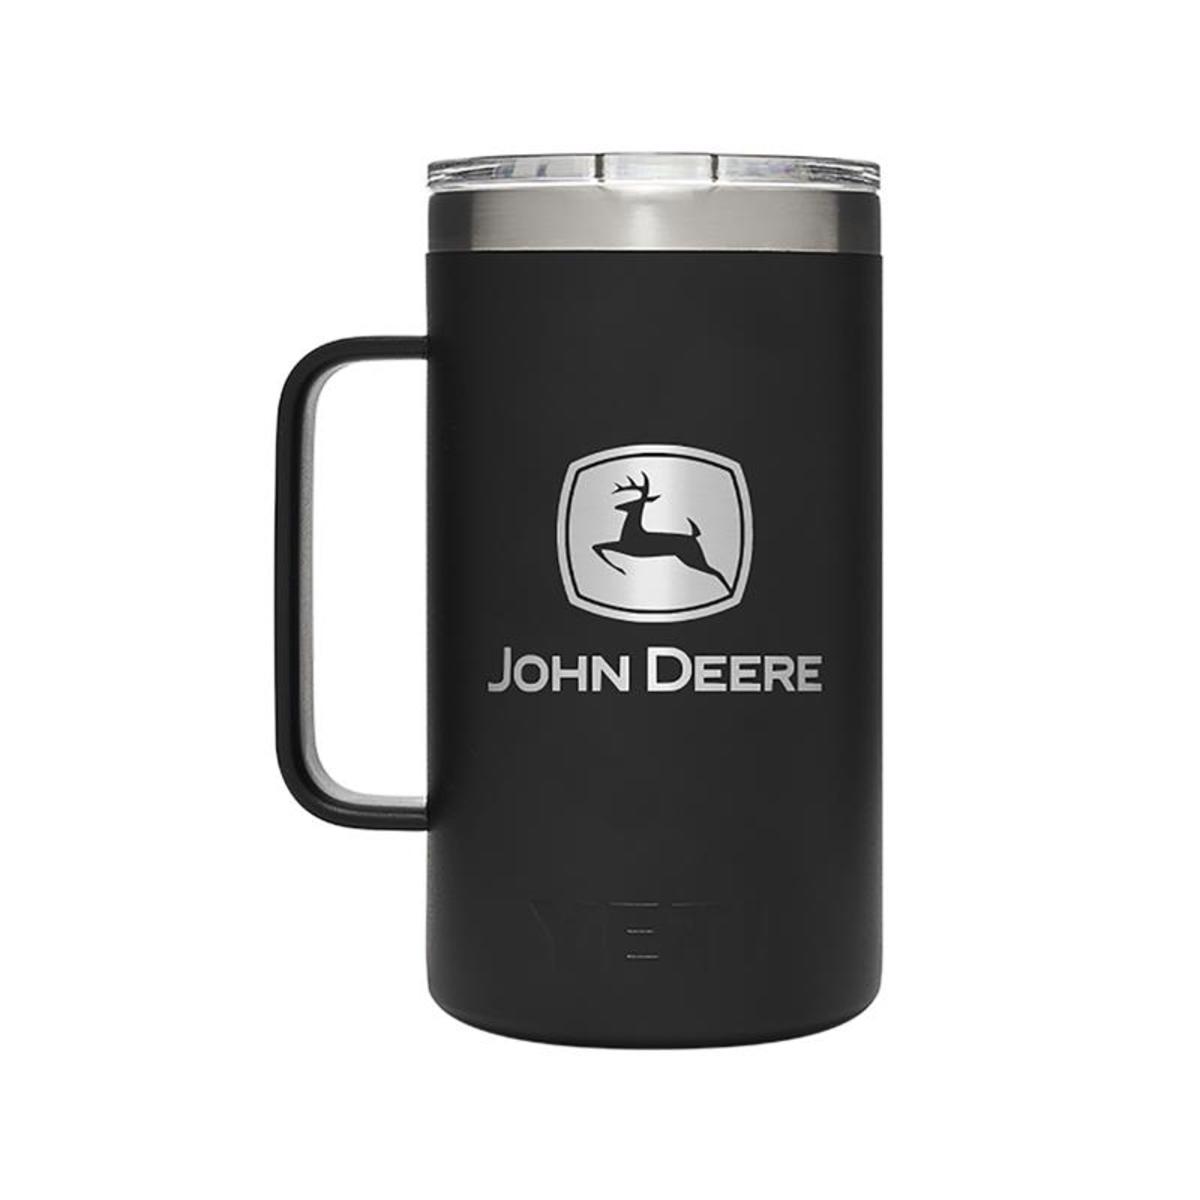 John Deere Yeti Limited Edition 20-oz Tumbler - LP82754